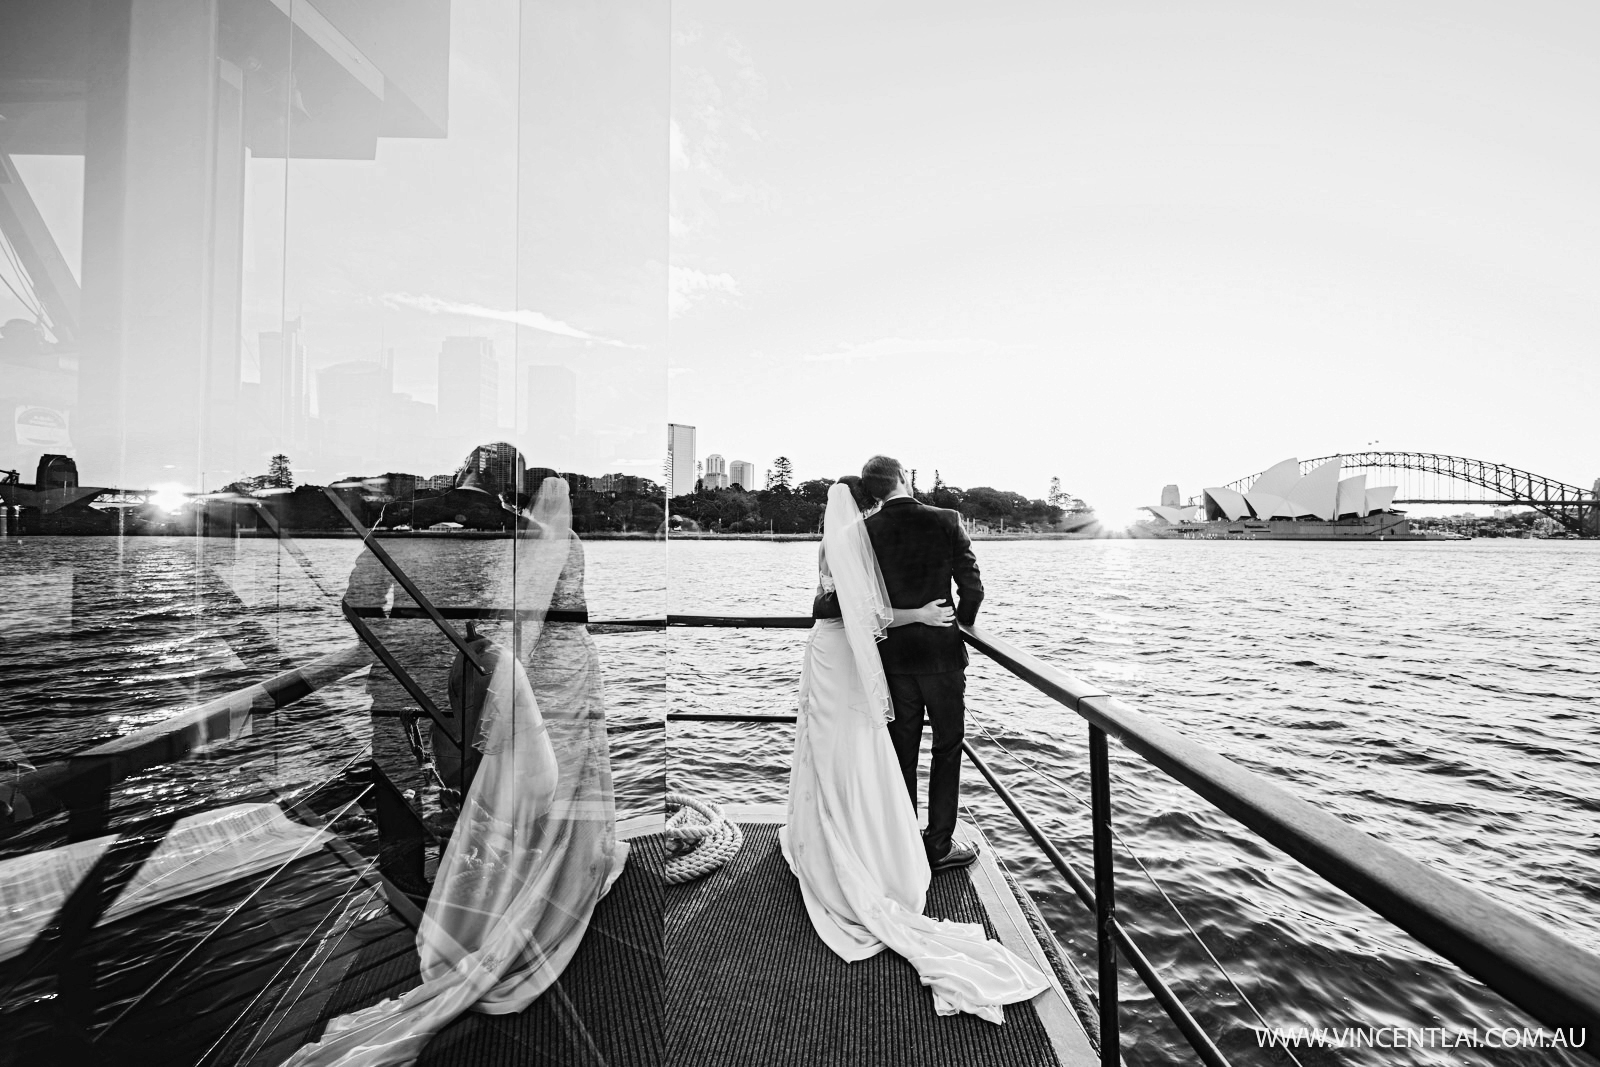 The Sydney Glass Island Wedding Vessel